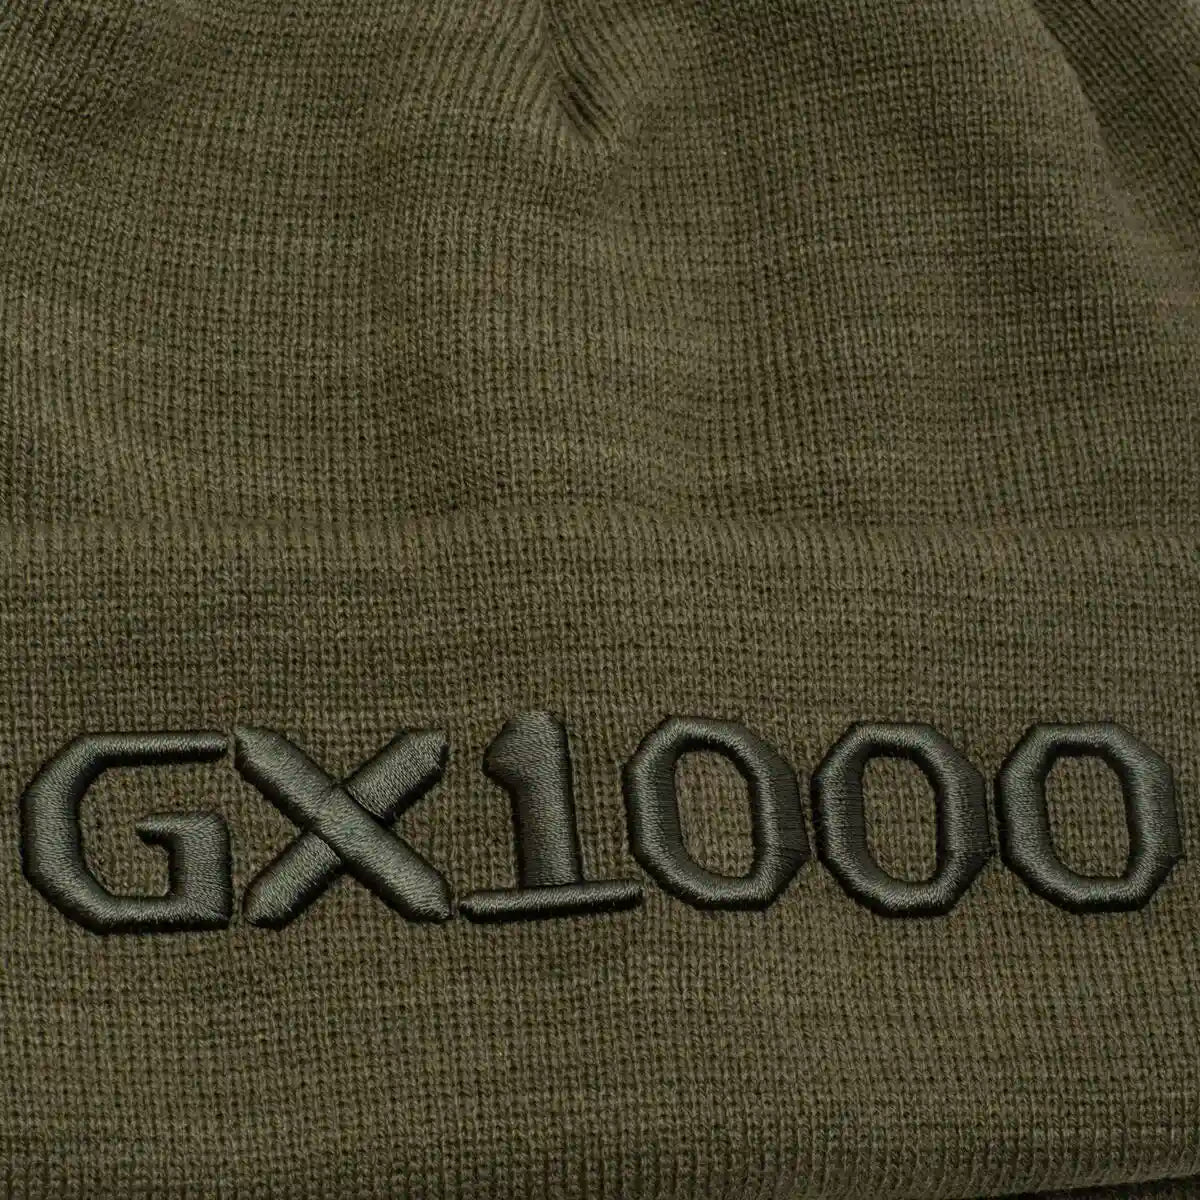 GX1000 OG Logo Beanie, olive - Tiki Room Skateboards - 2